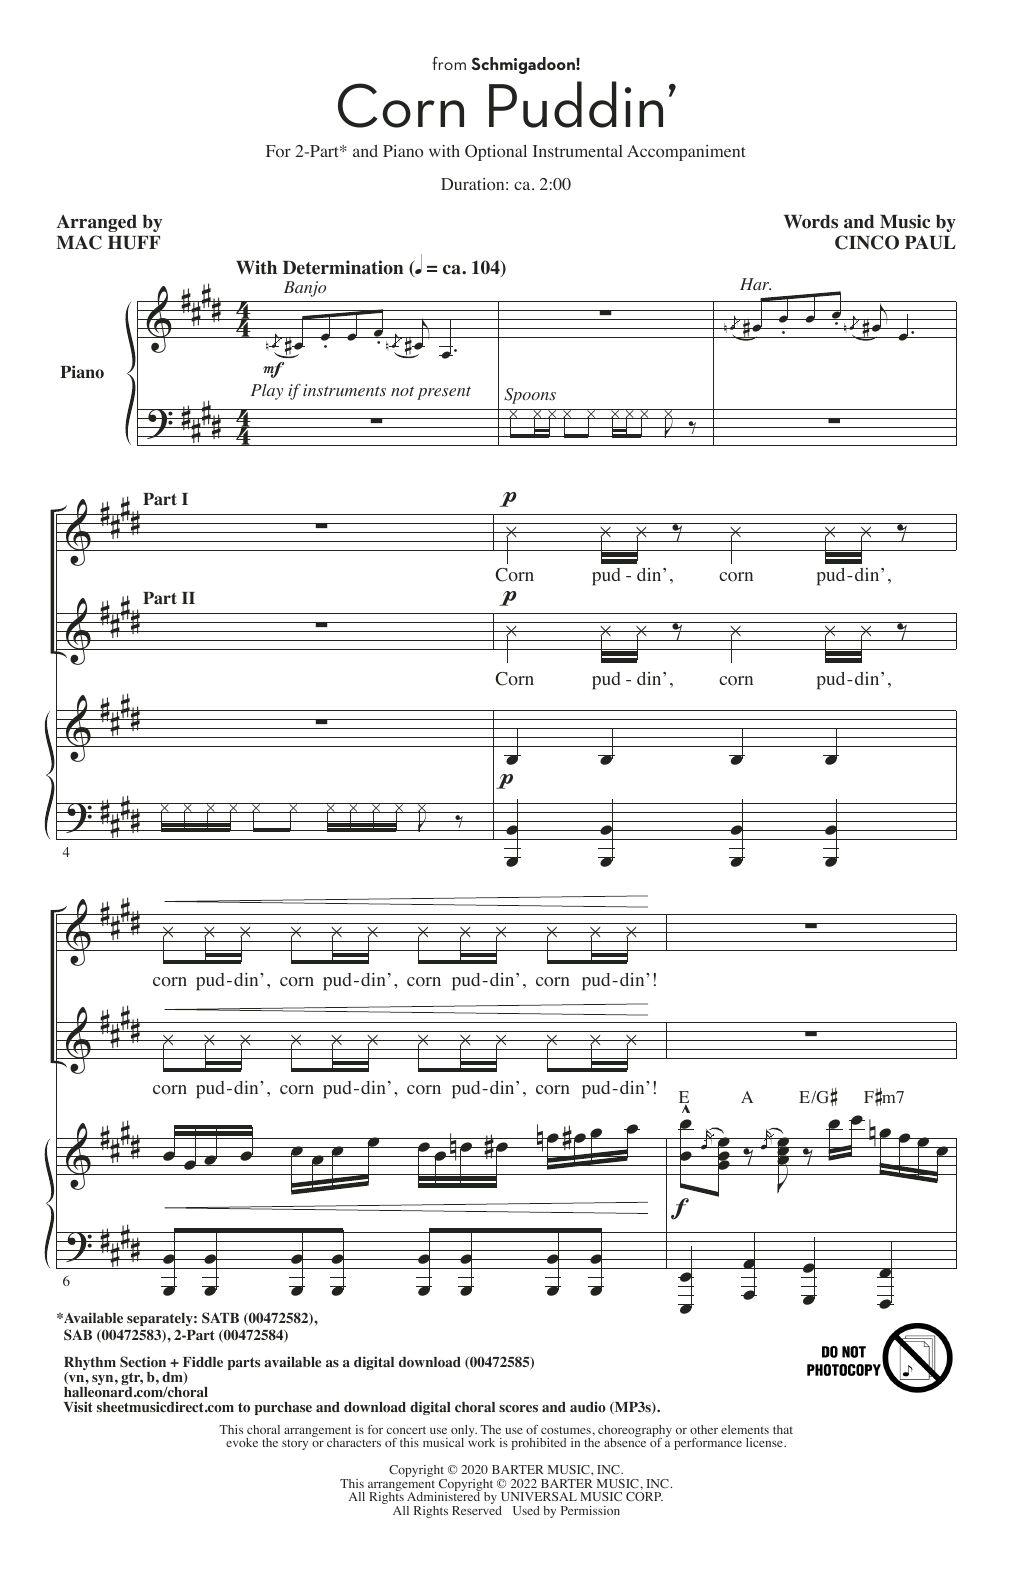 Cinco Paul Corn Puddin' (from Schmigadoon!) (arr. Mac Huff) Sheet Music Notes & Chords for SAB Choir - Download or Print PDF